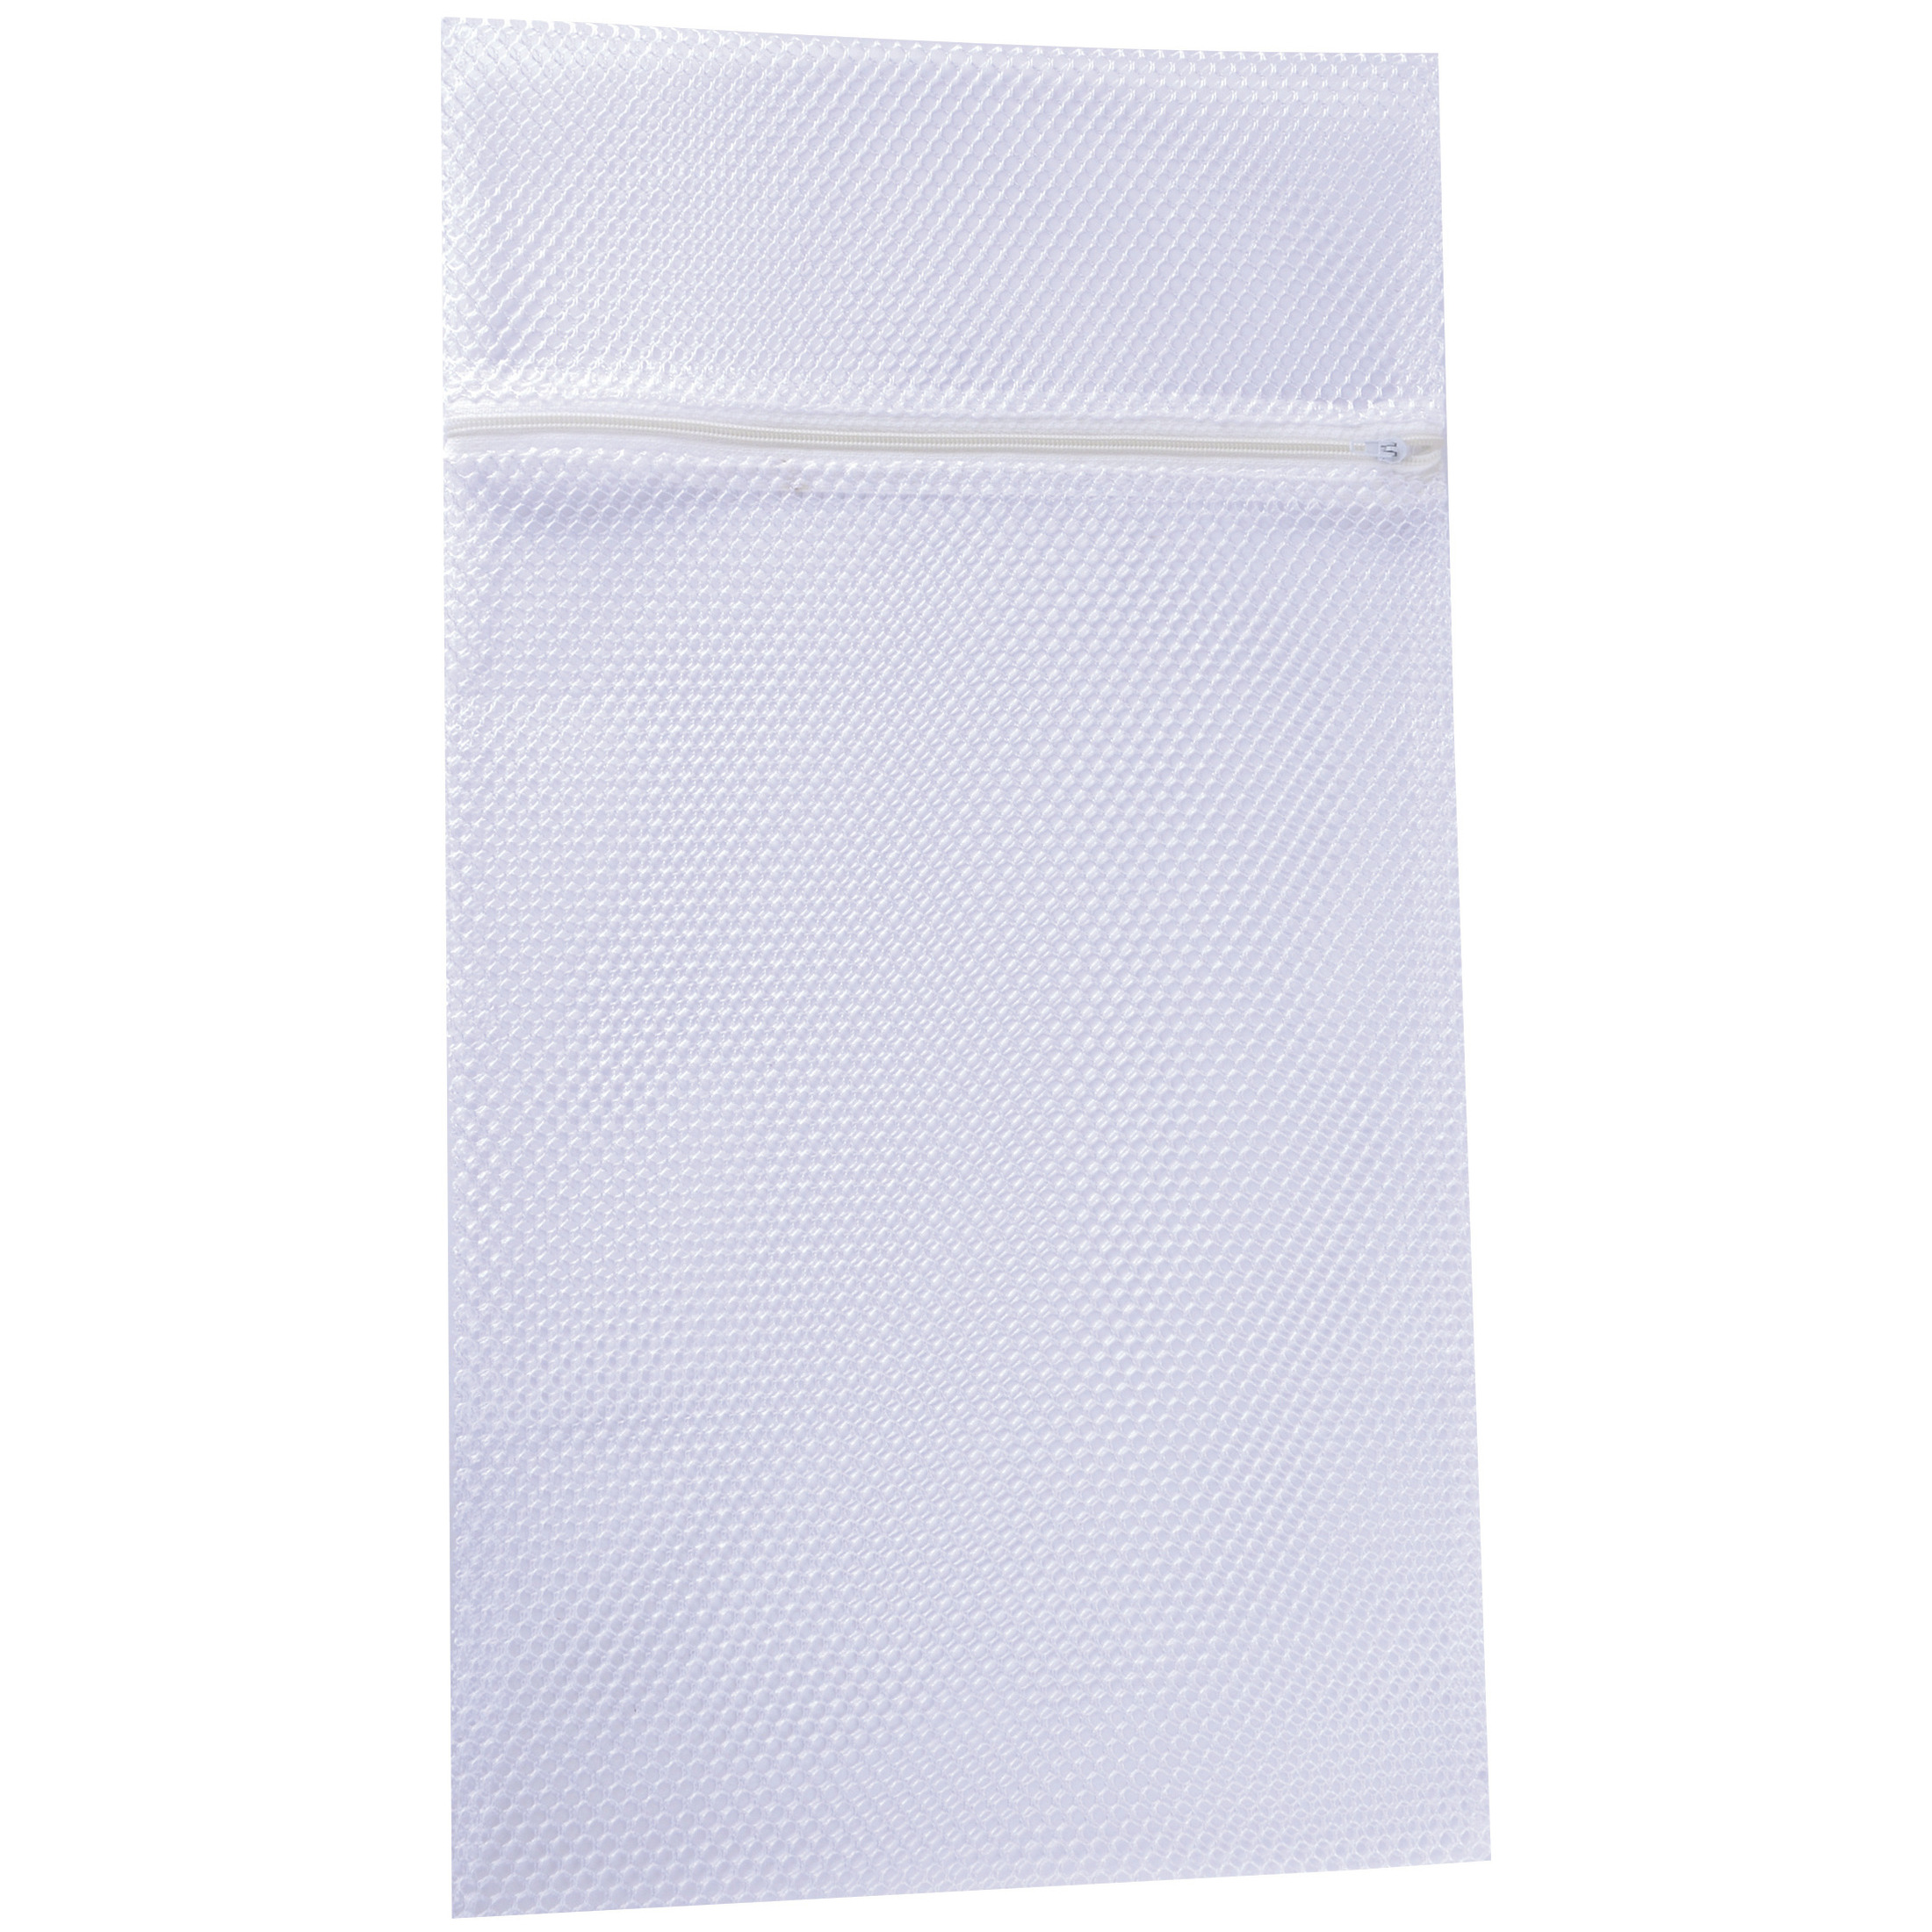 MSV Waszak voor kwetsbare kleding wasgoed-waszak wit XL size 60 x 90 cm